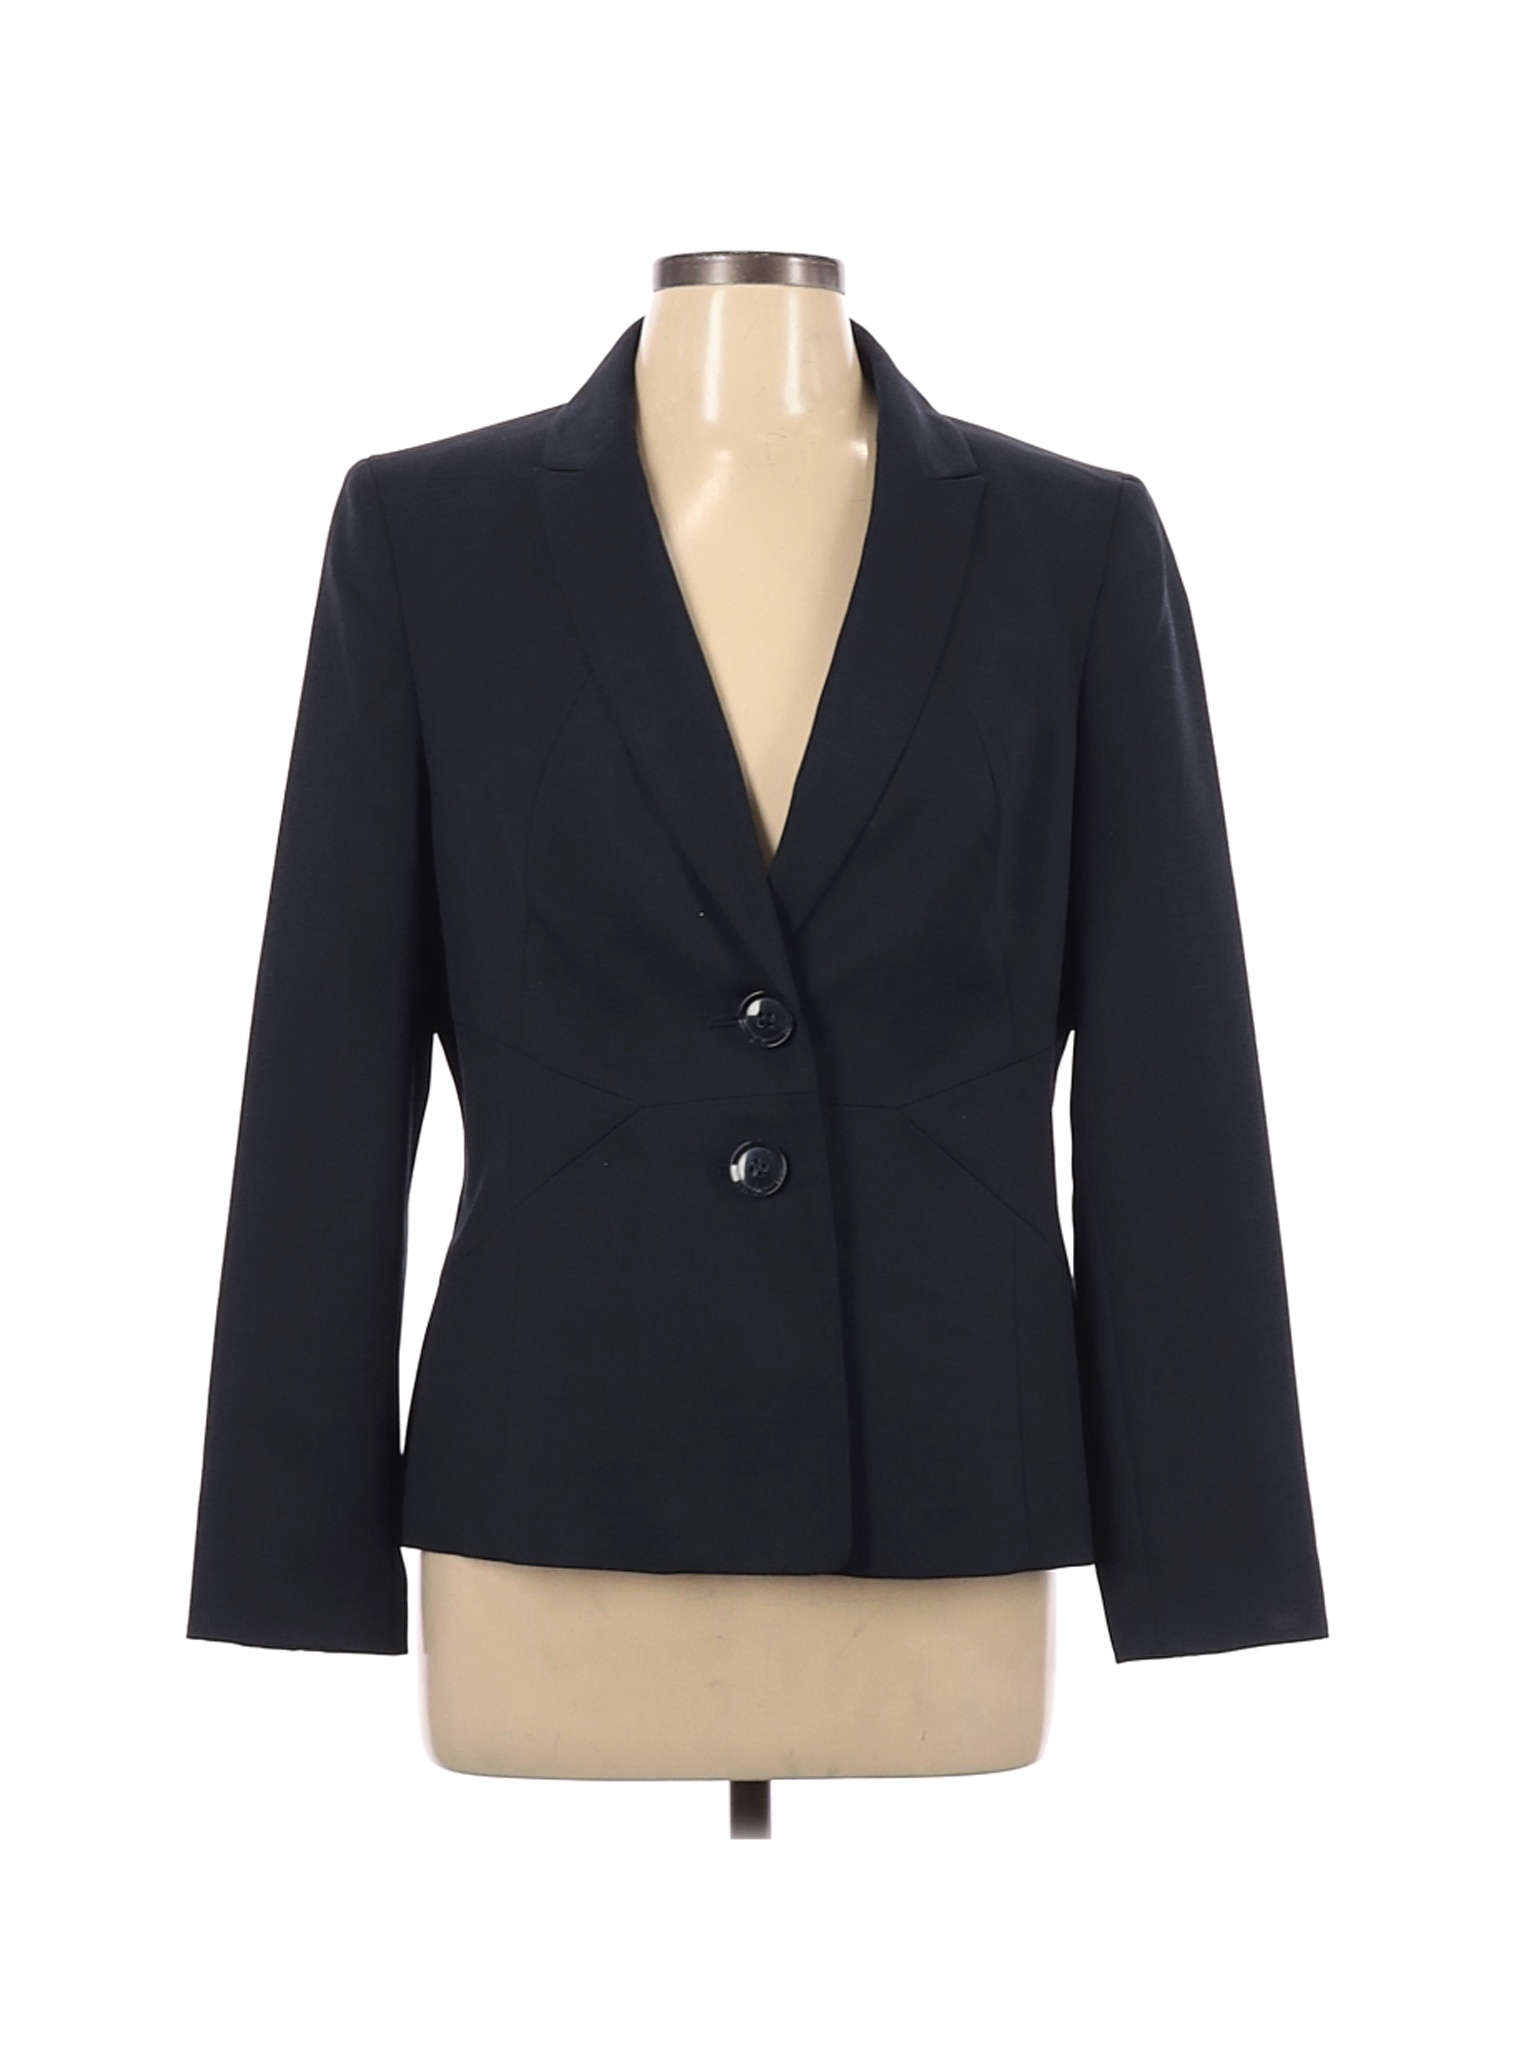 Le Suit Women Black Blazer 10 | eBay